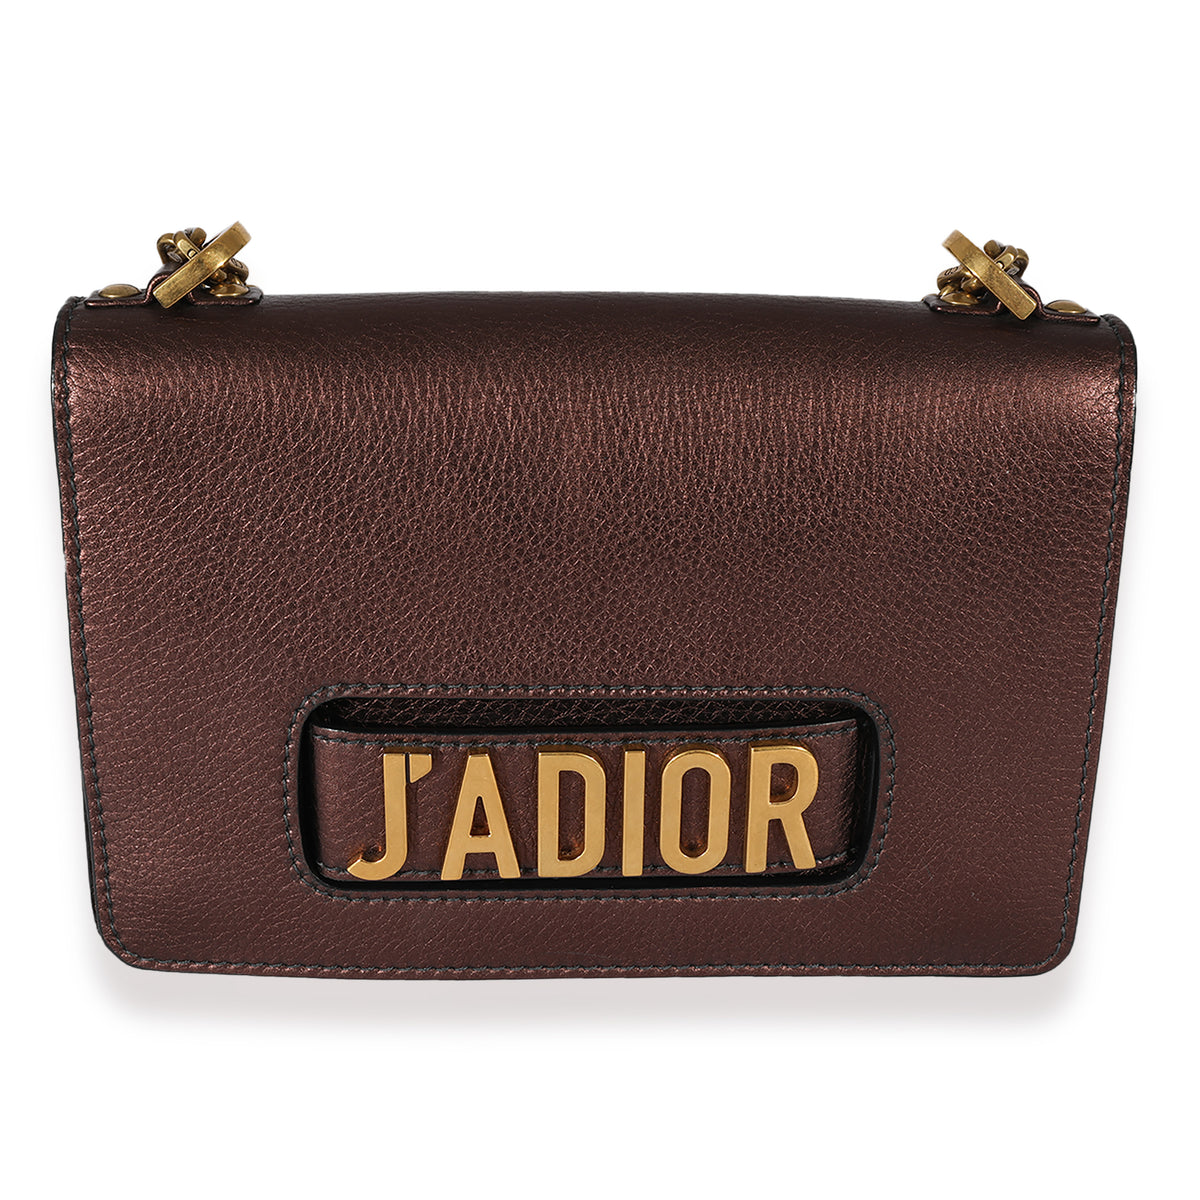 J'adior leather handbag Dior Black in Leather - 30671029